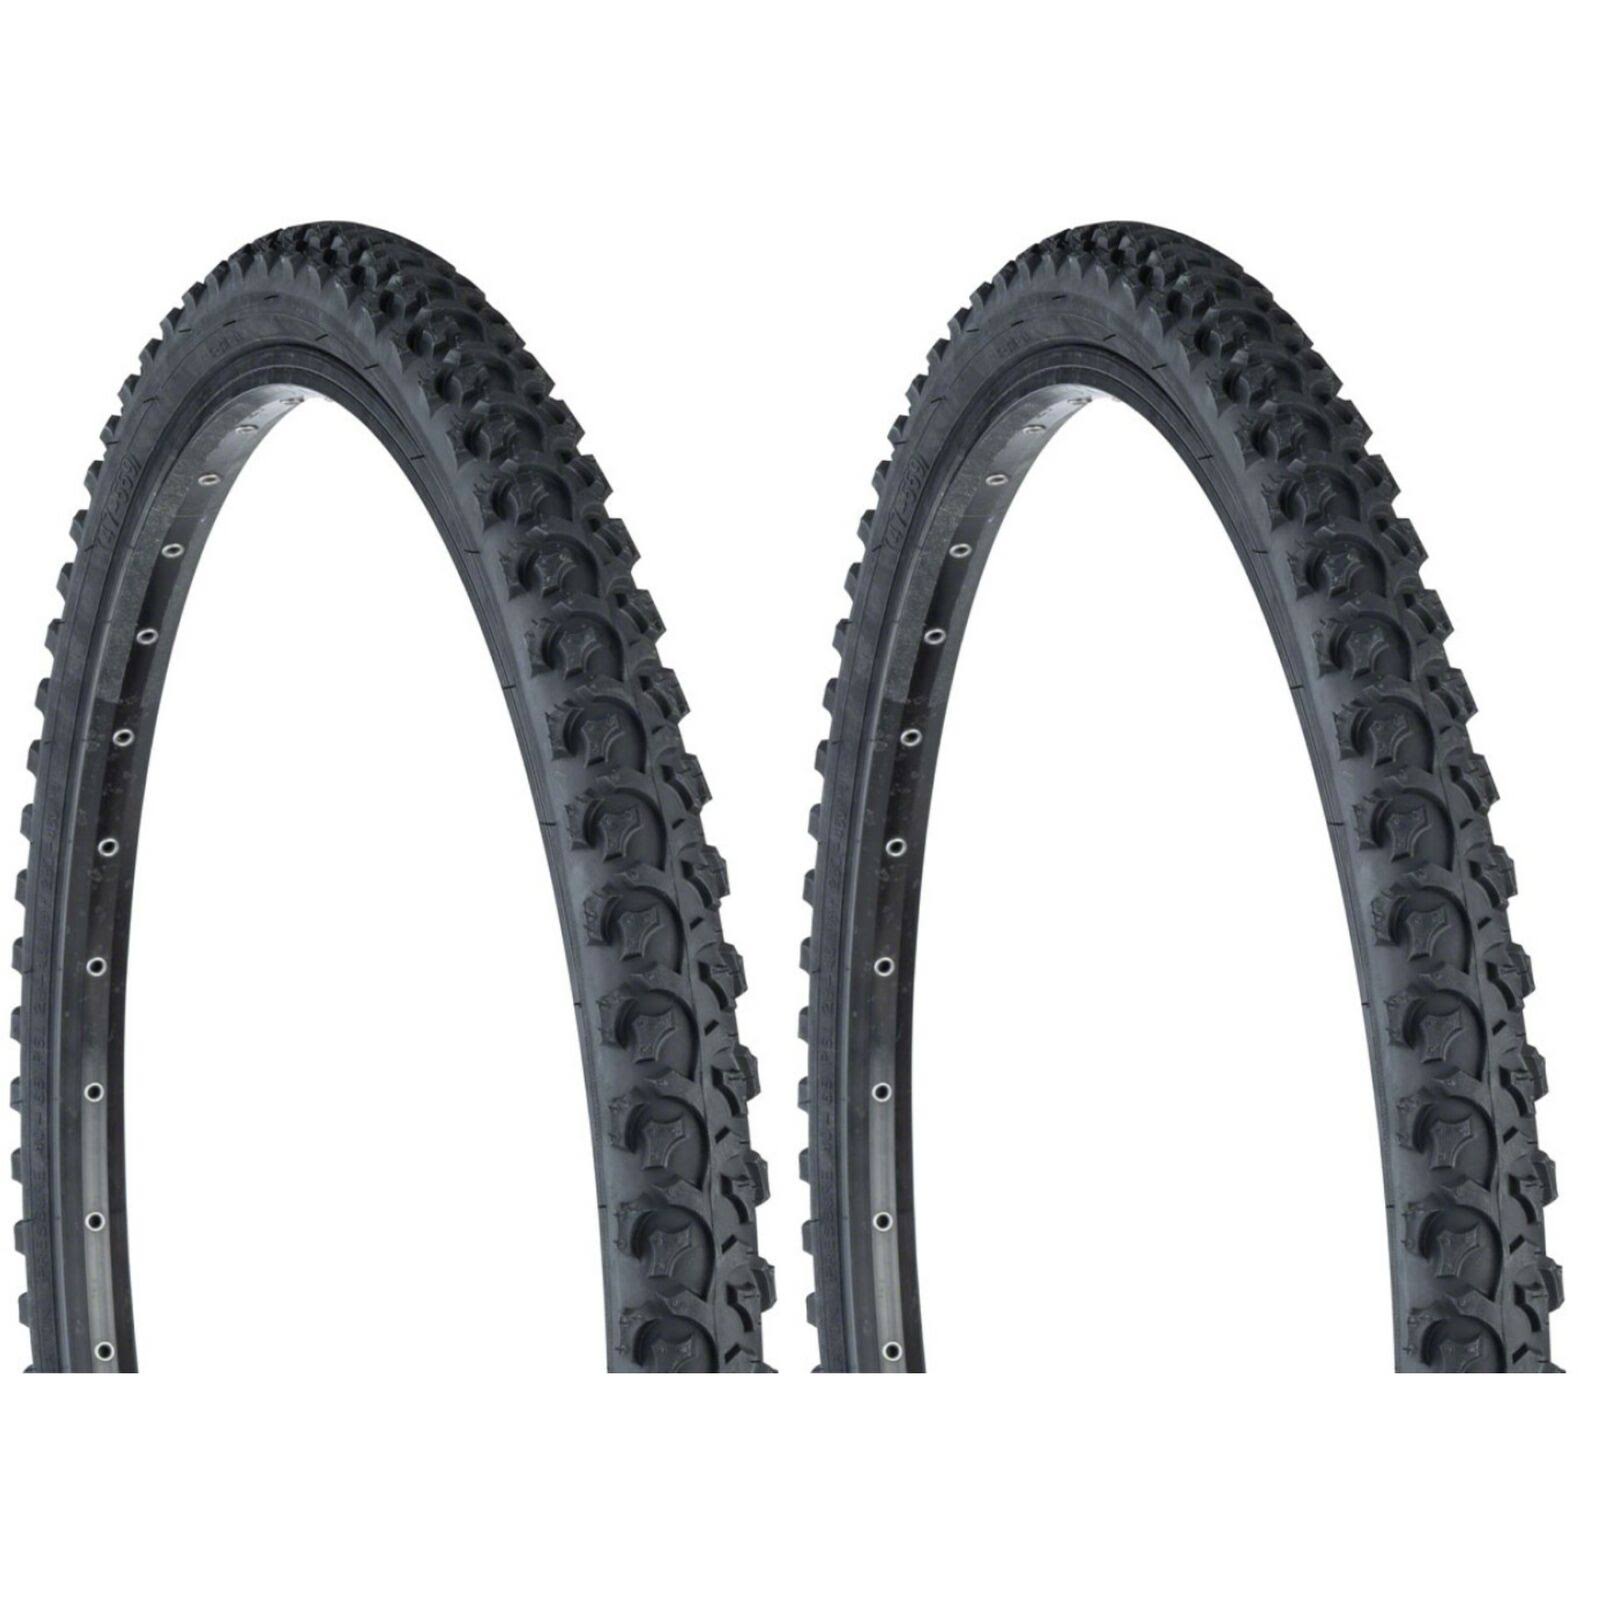 Sunlite Bicycle Kenda K831 Alpha Bite Trail Tire - Black